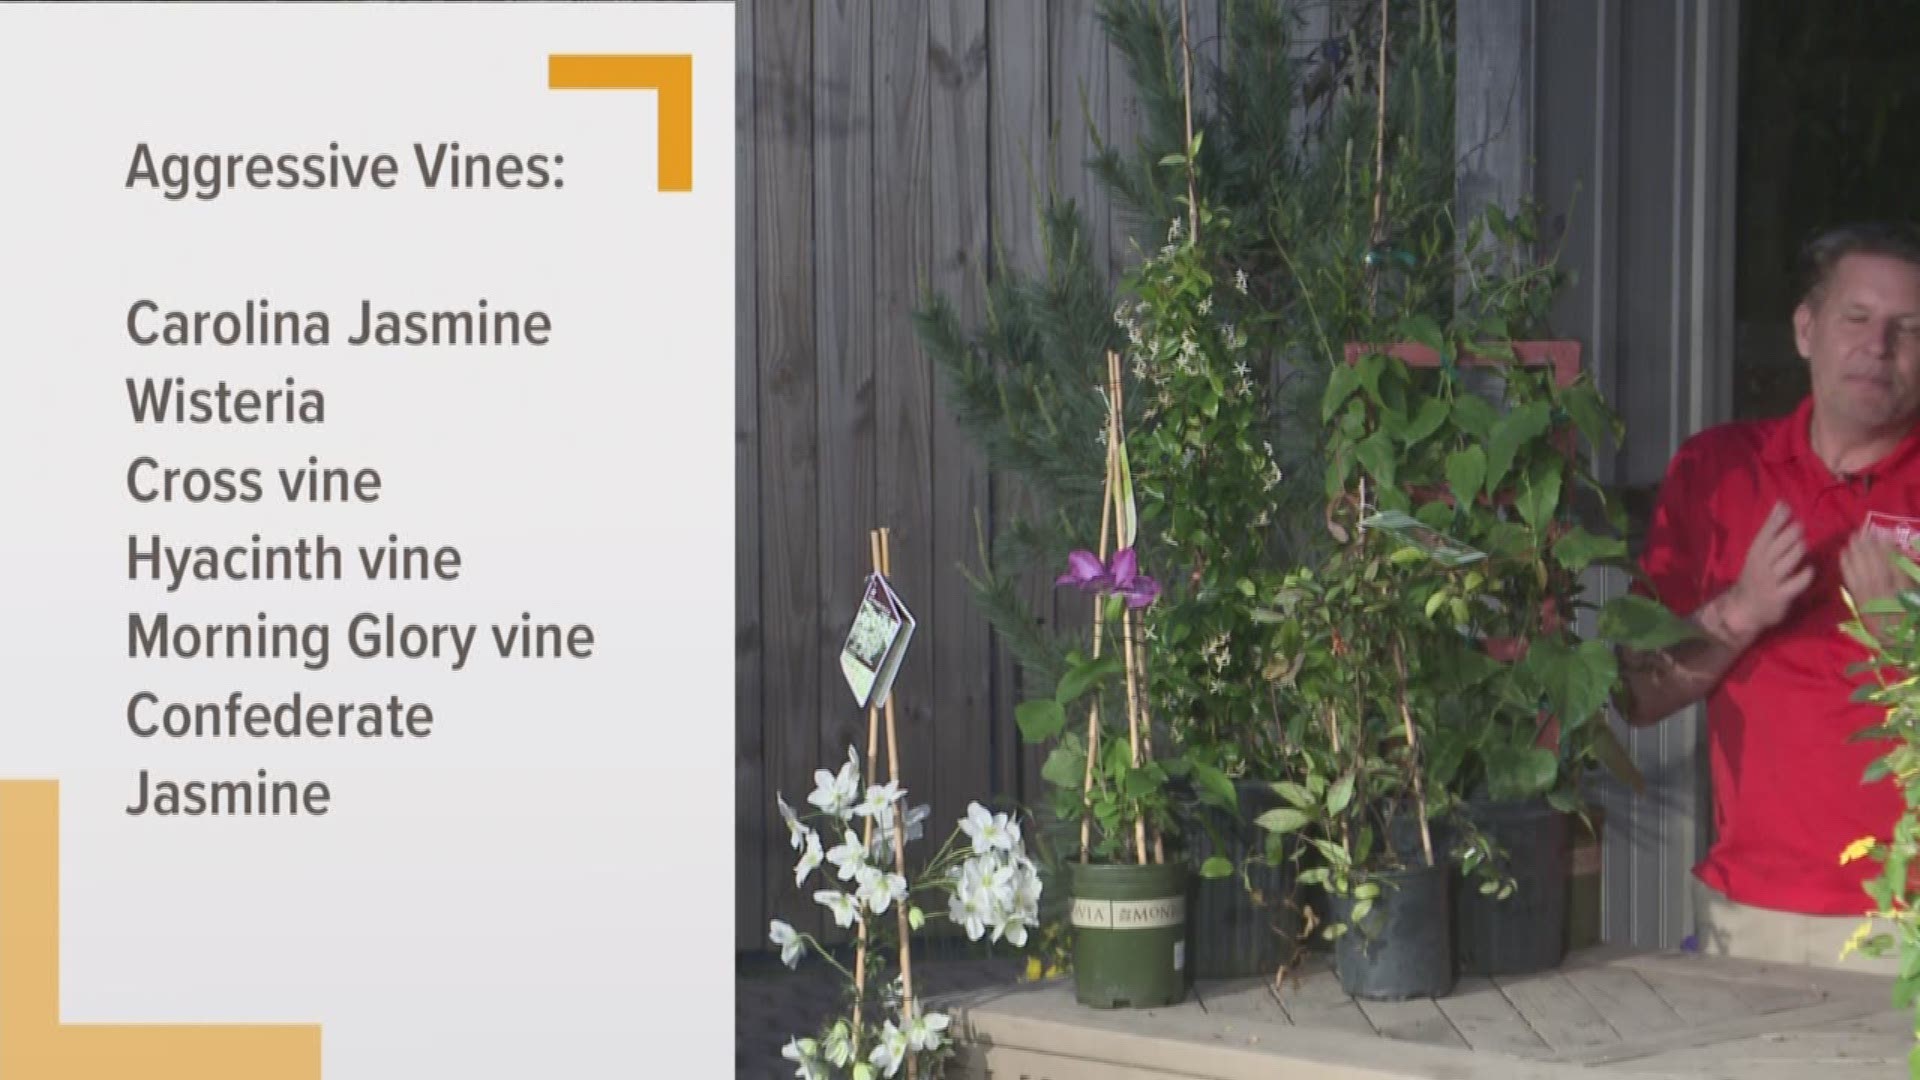 Chris H. Olsen highlights some of his favorite vines.